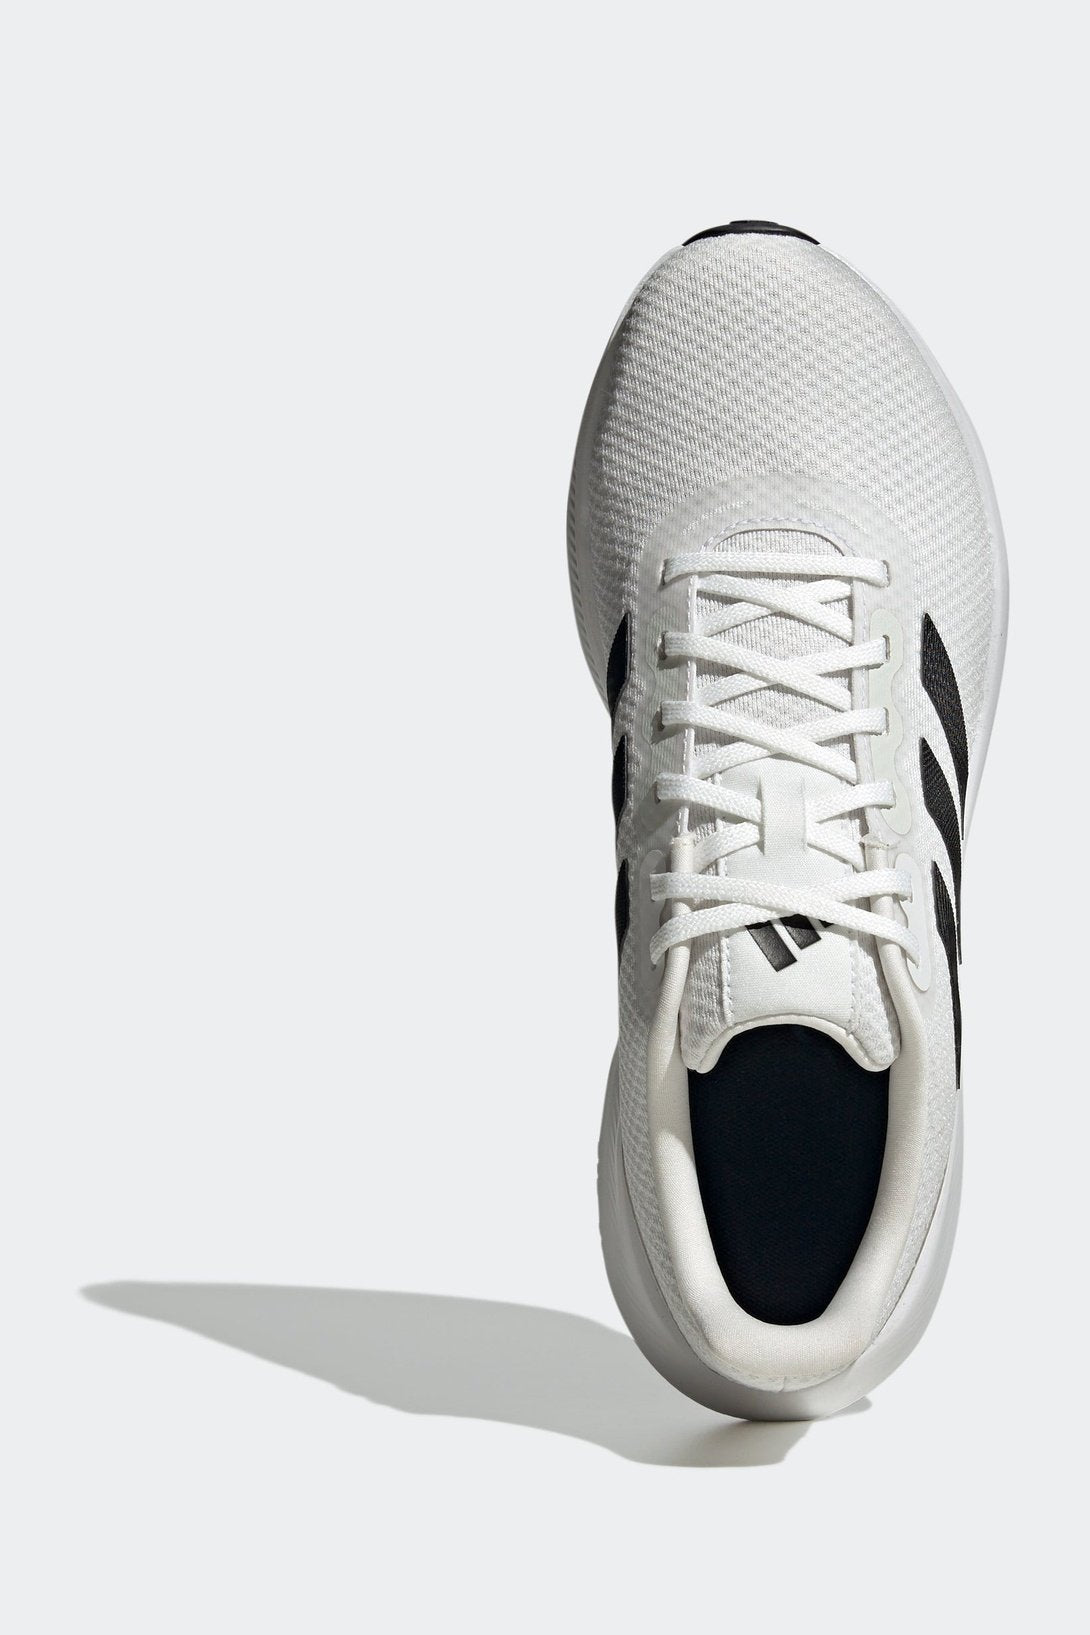 ADIDAS - נעלי ריצה לגברים RUNFALCON 3.0 בצבע לבן - MASHBIR//365